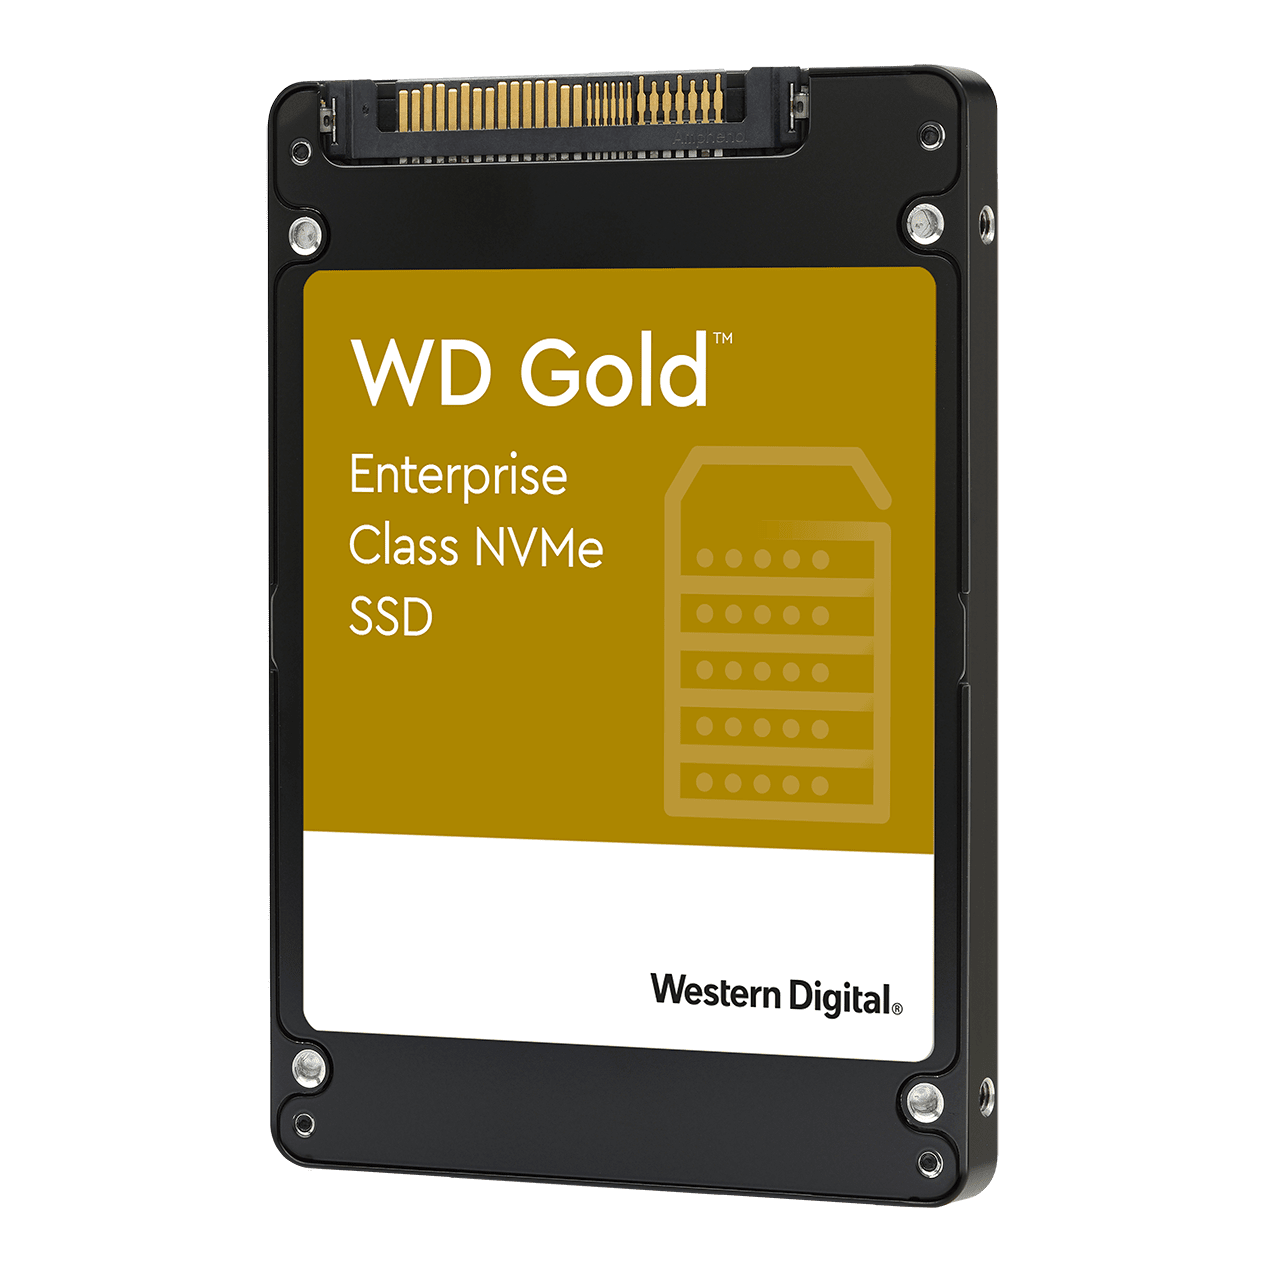 WDS192T1D0D | Western Digital Wds192t1d0d Wd Gold Nvme 1.92tb Pci-e 3.1 X4 U.2 7mm Enterprise Class Internal Solid State Drive SSD - NEW